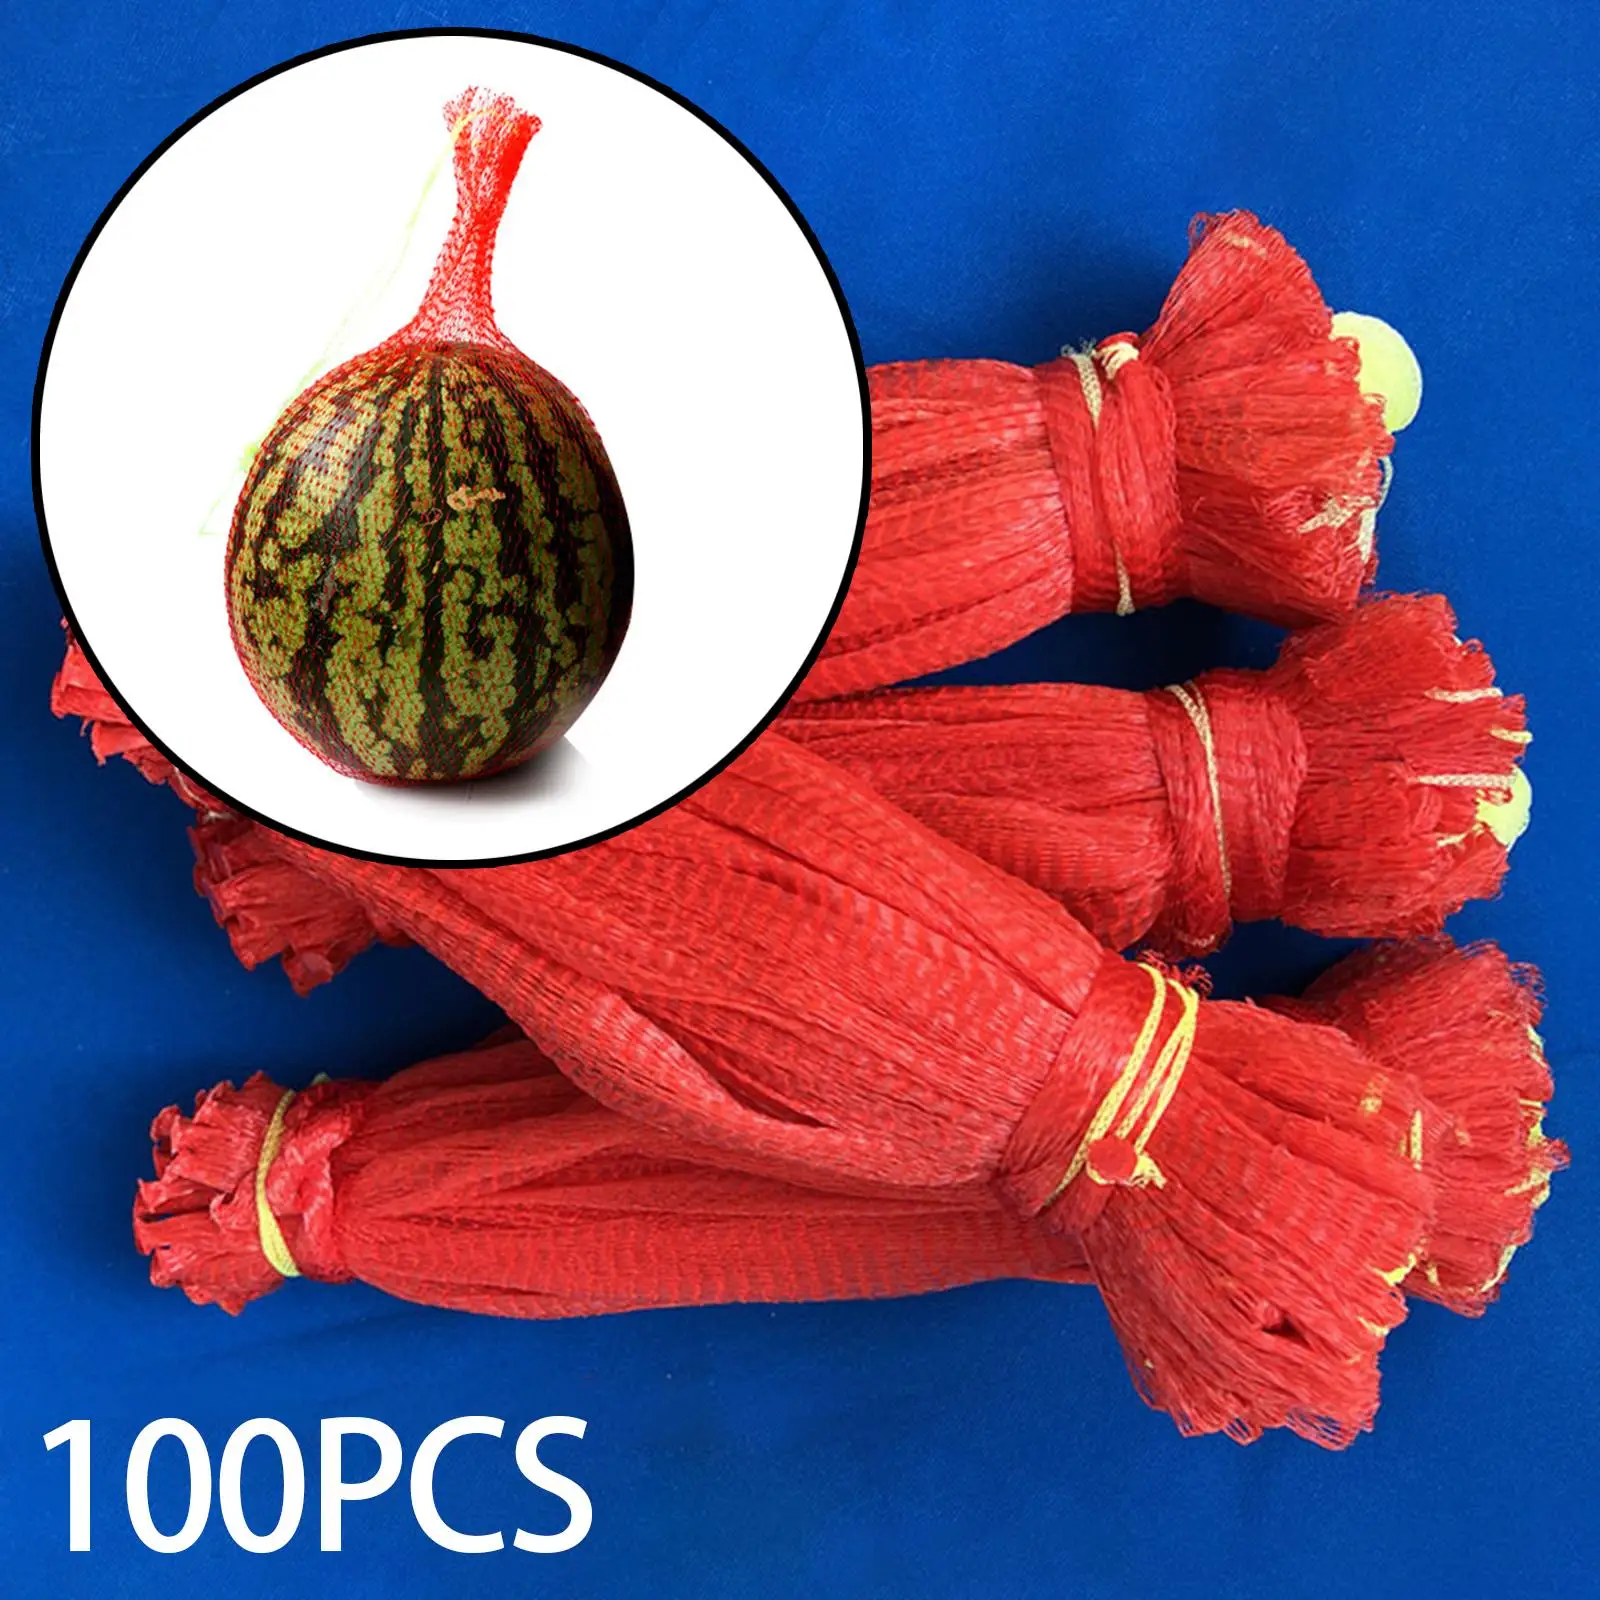 100Pcs Watermelon Nets Grow Fruits Mesh Bags for Garden Cantaloupes Vegetable